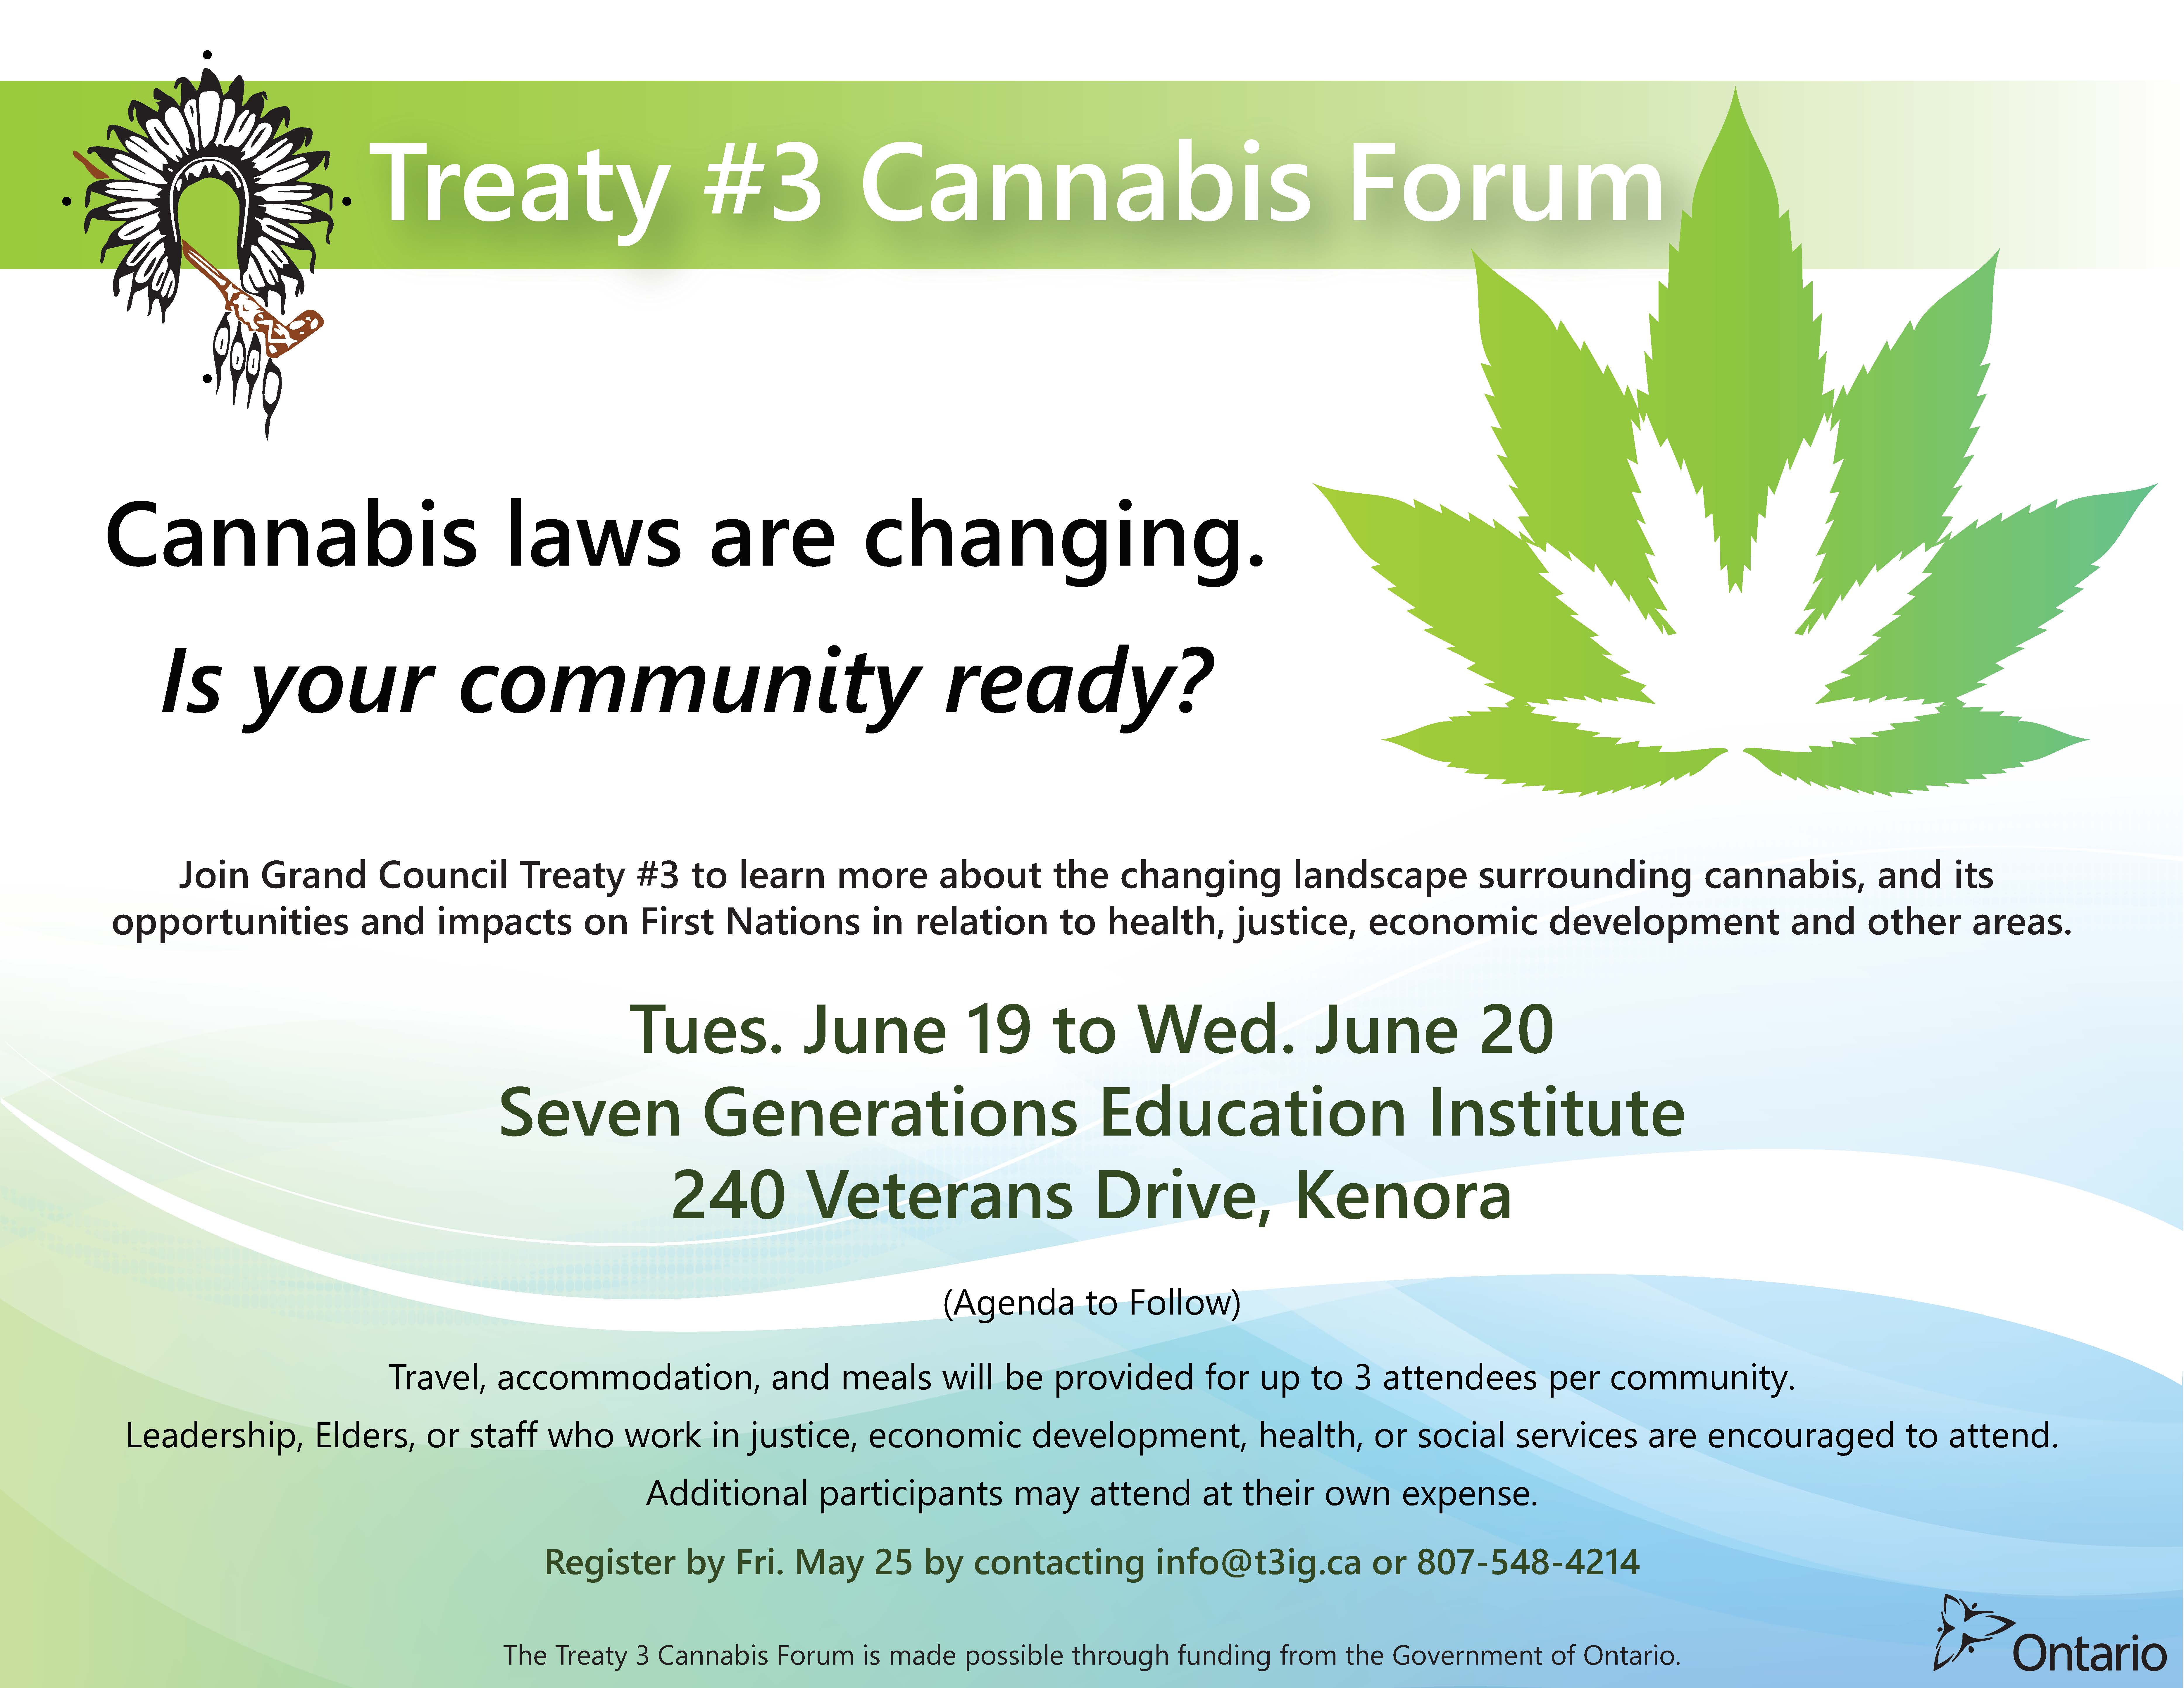 Treaty #3 Cannabis Forum - Grand Council Treaty #3